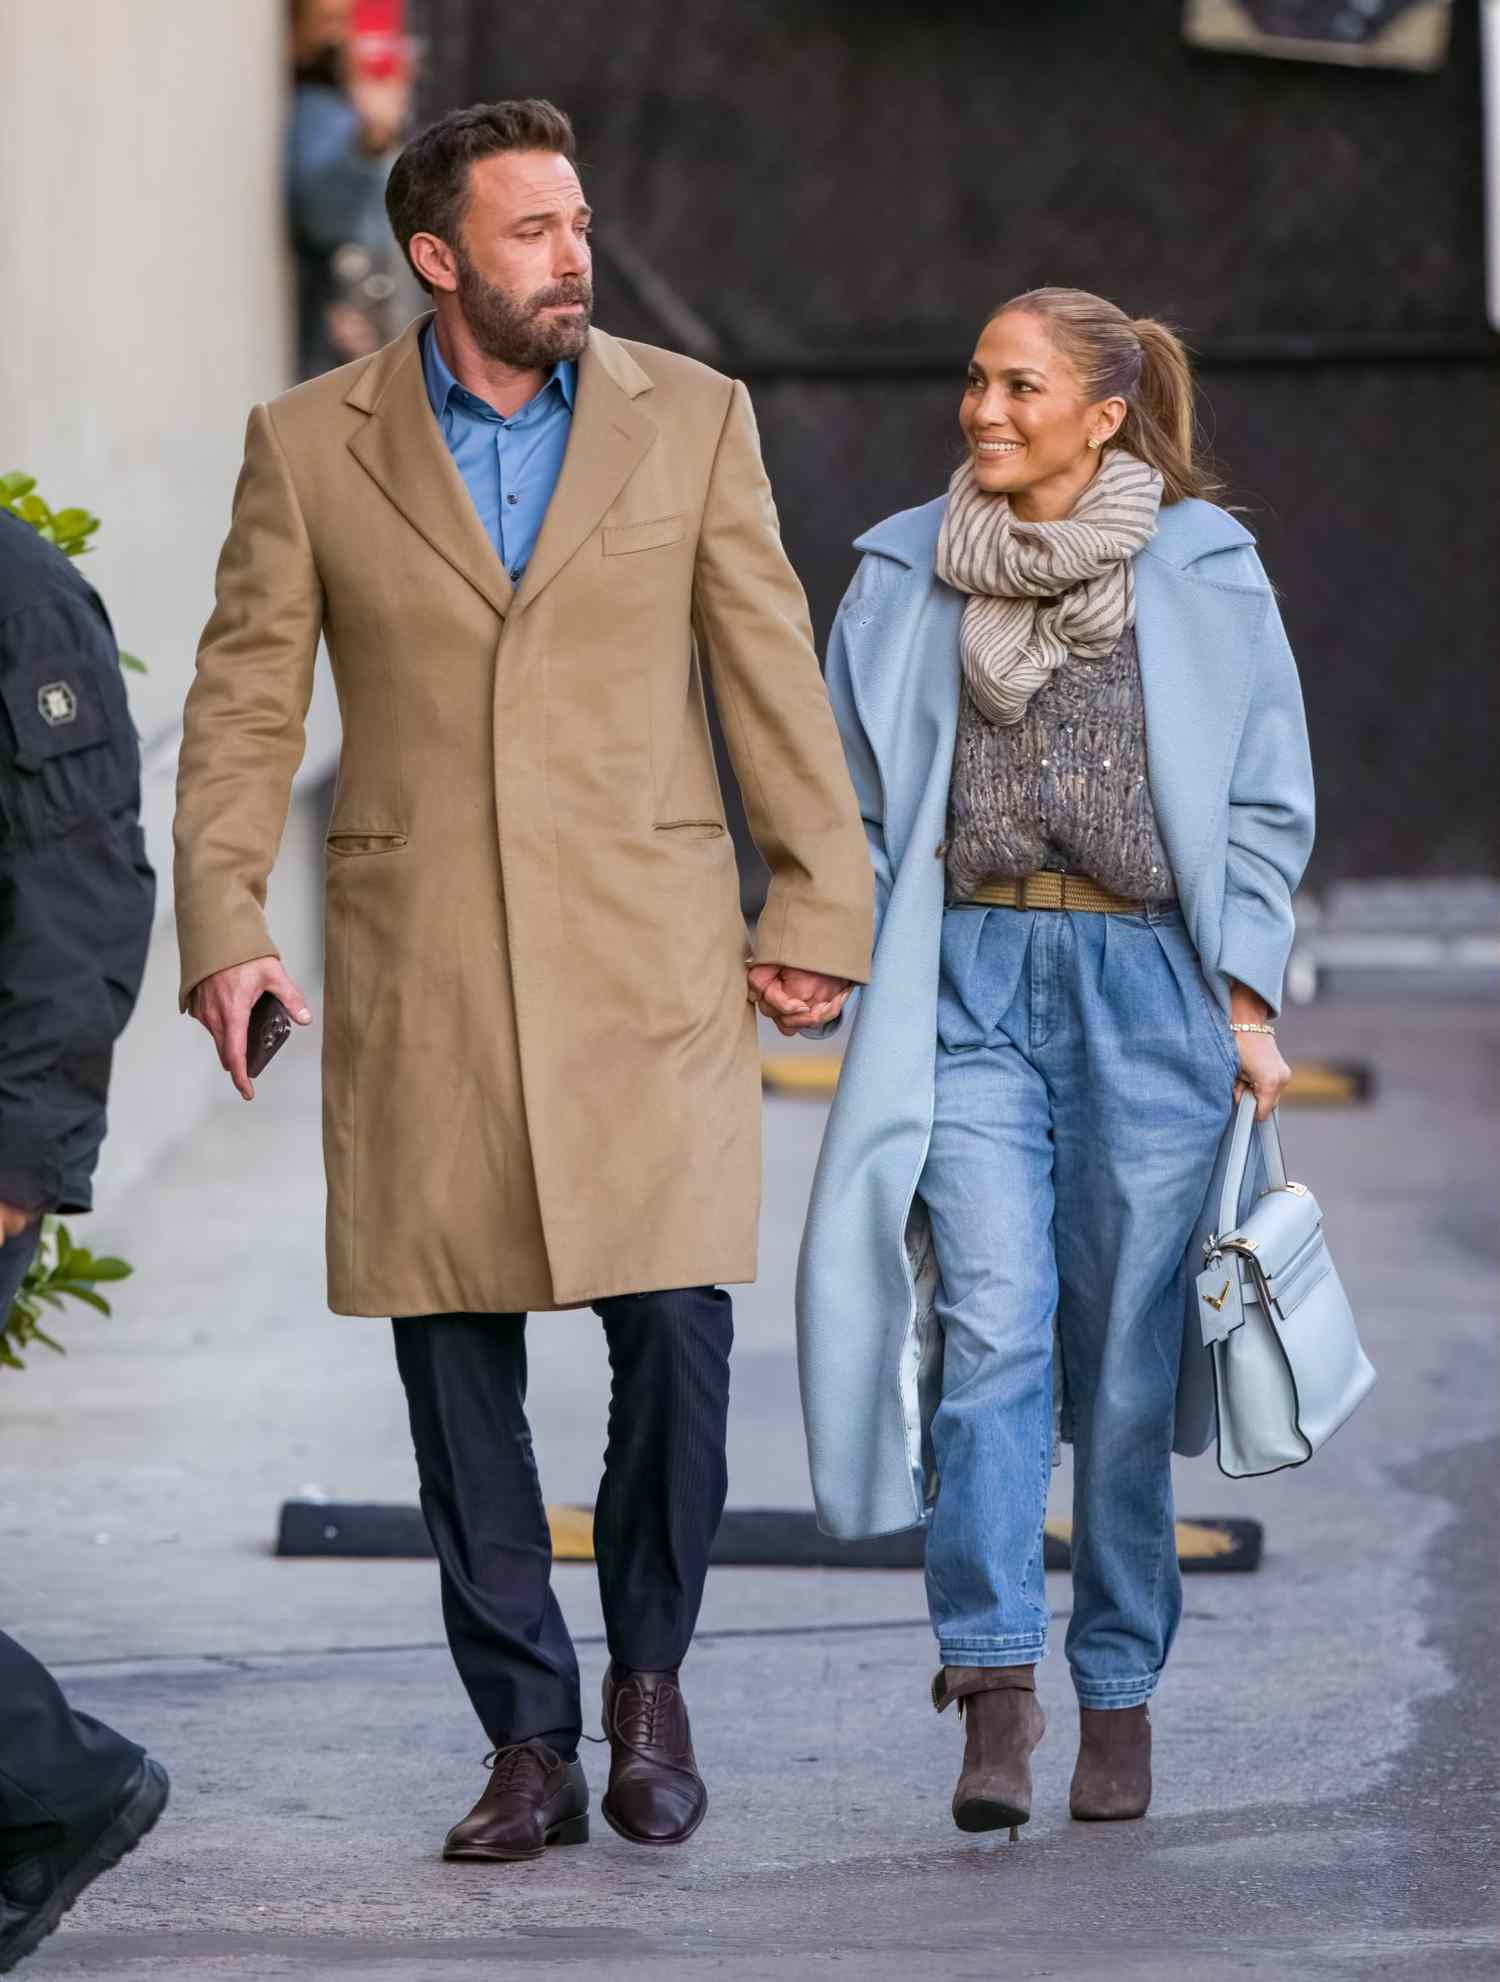 Ben Affleck and Jennifer Lopez